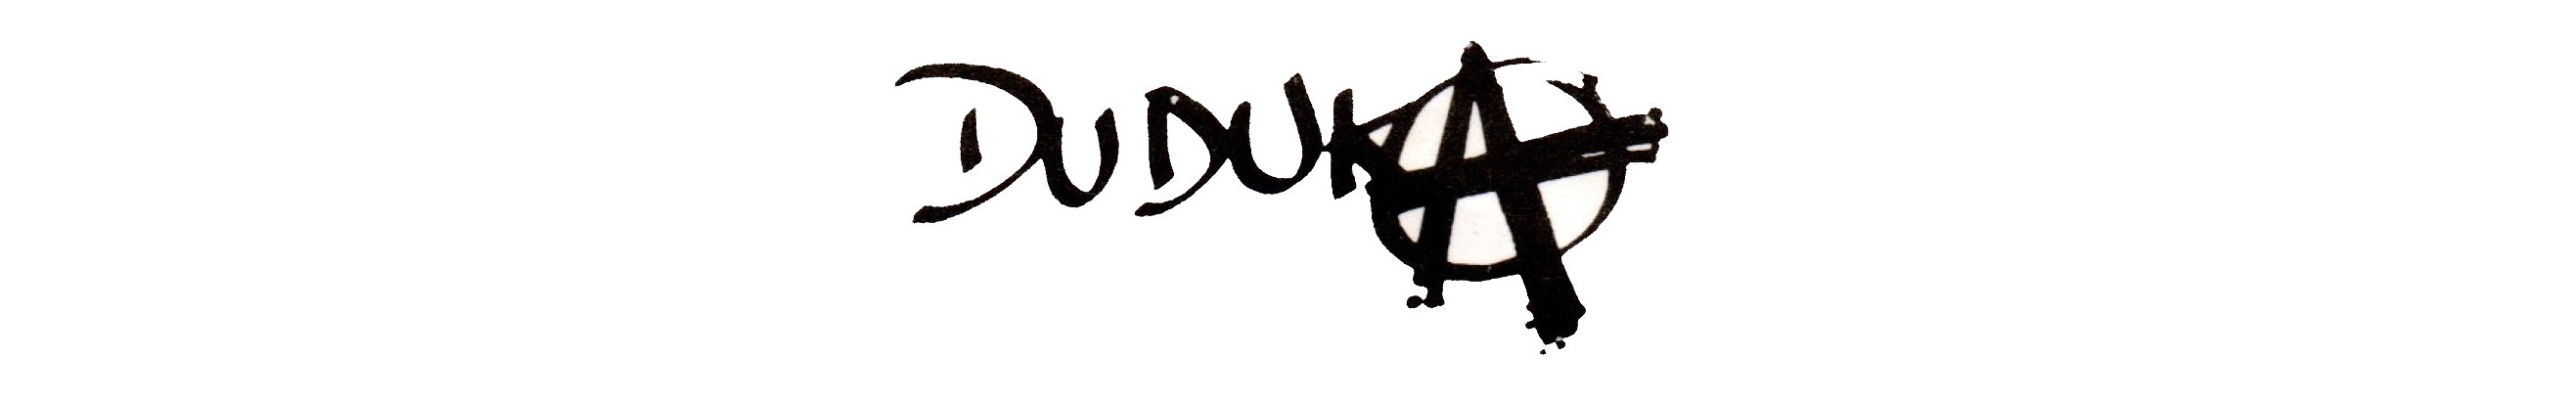 DUDUKA MONTEIRO's profile banner